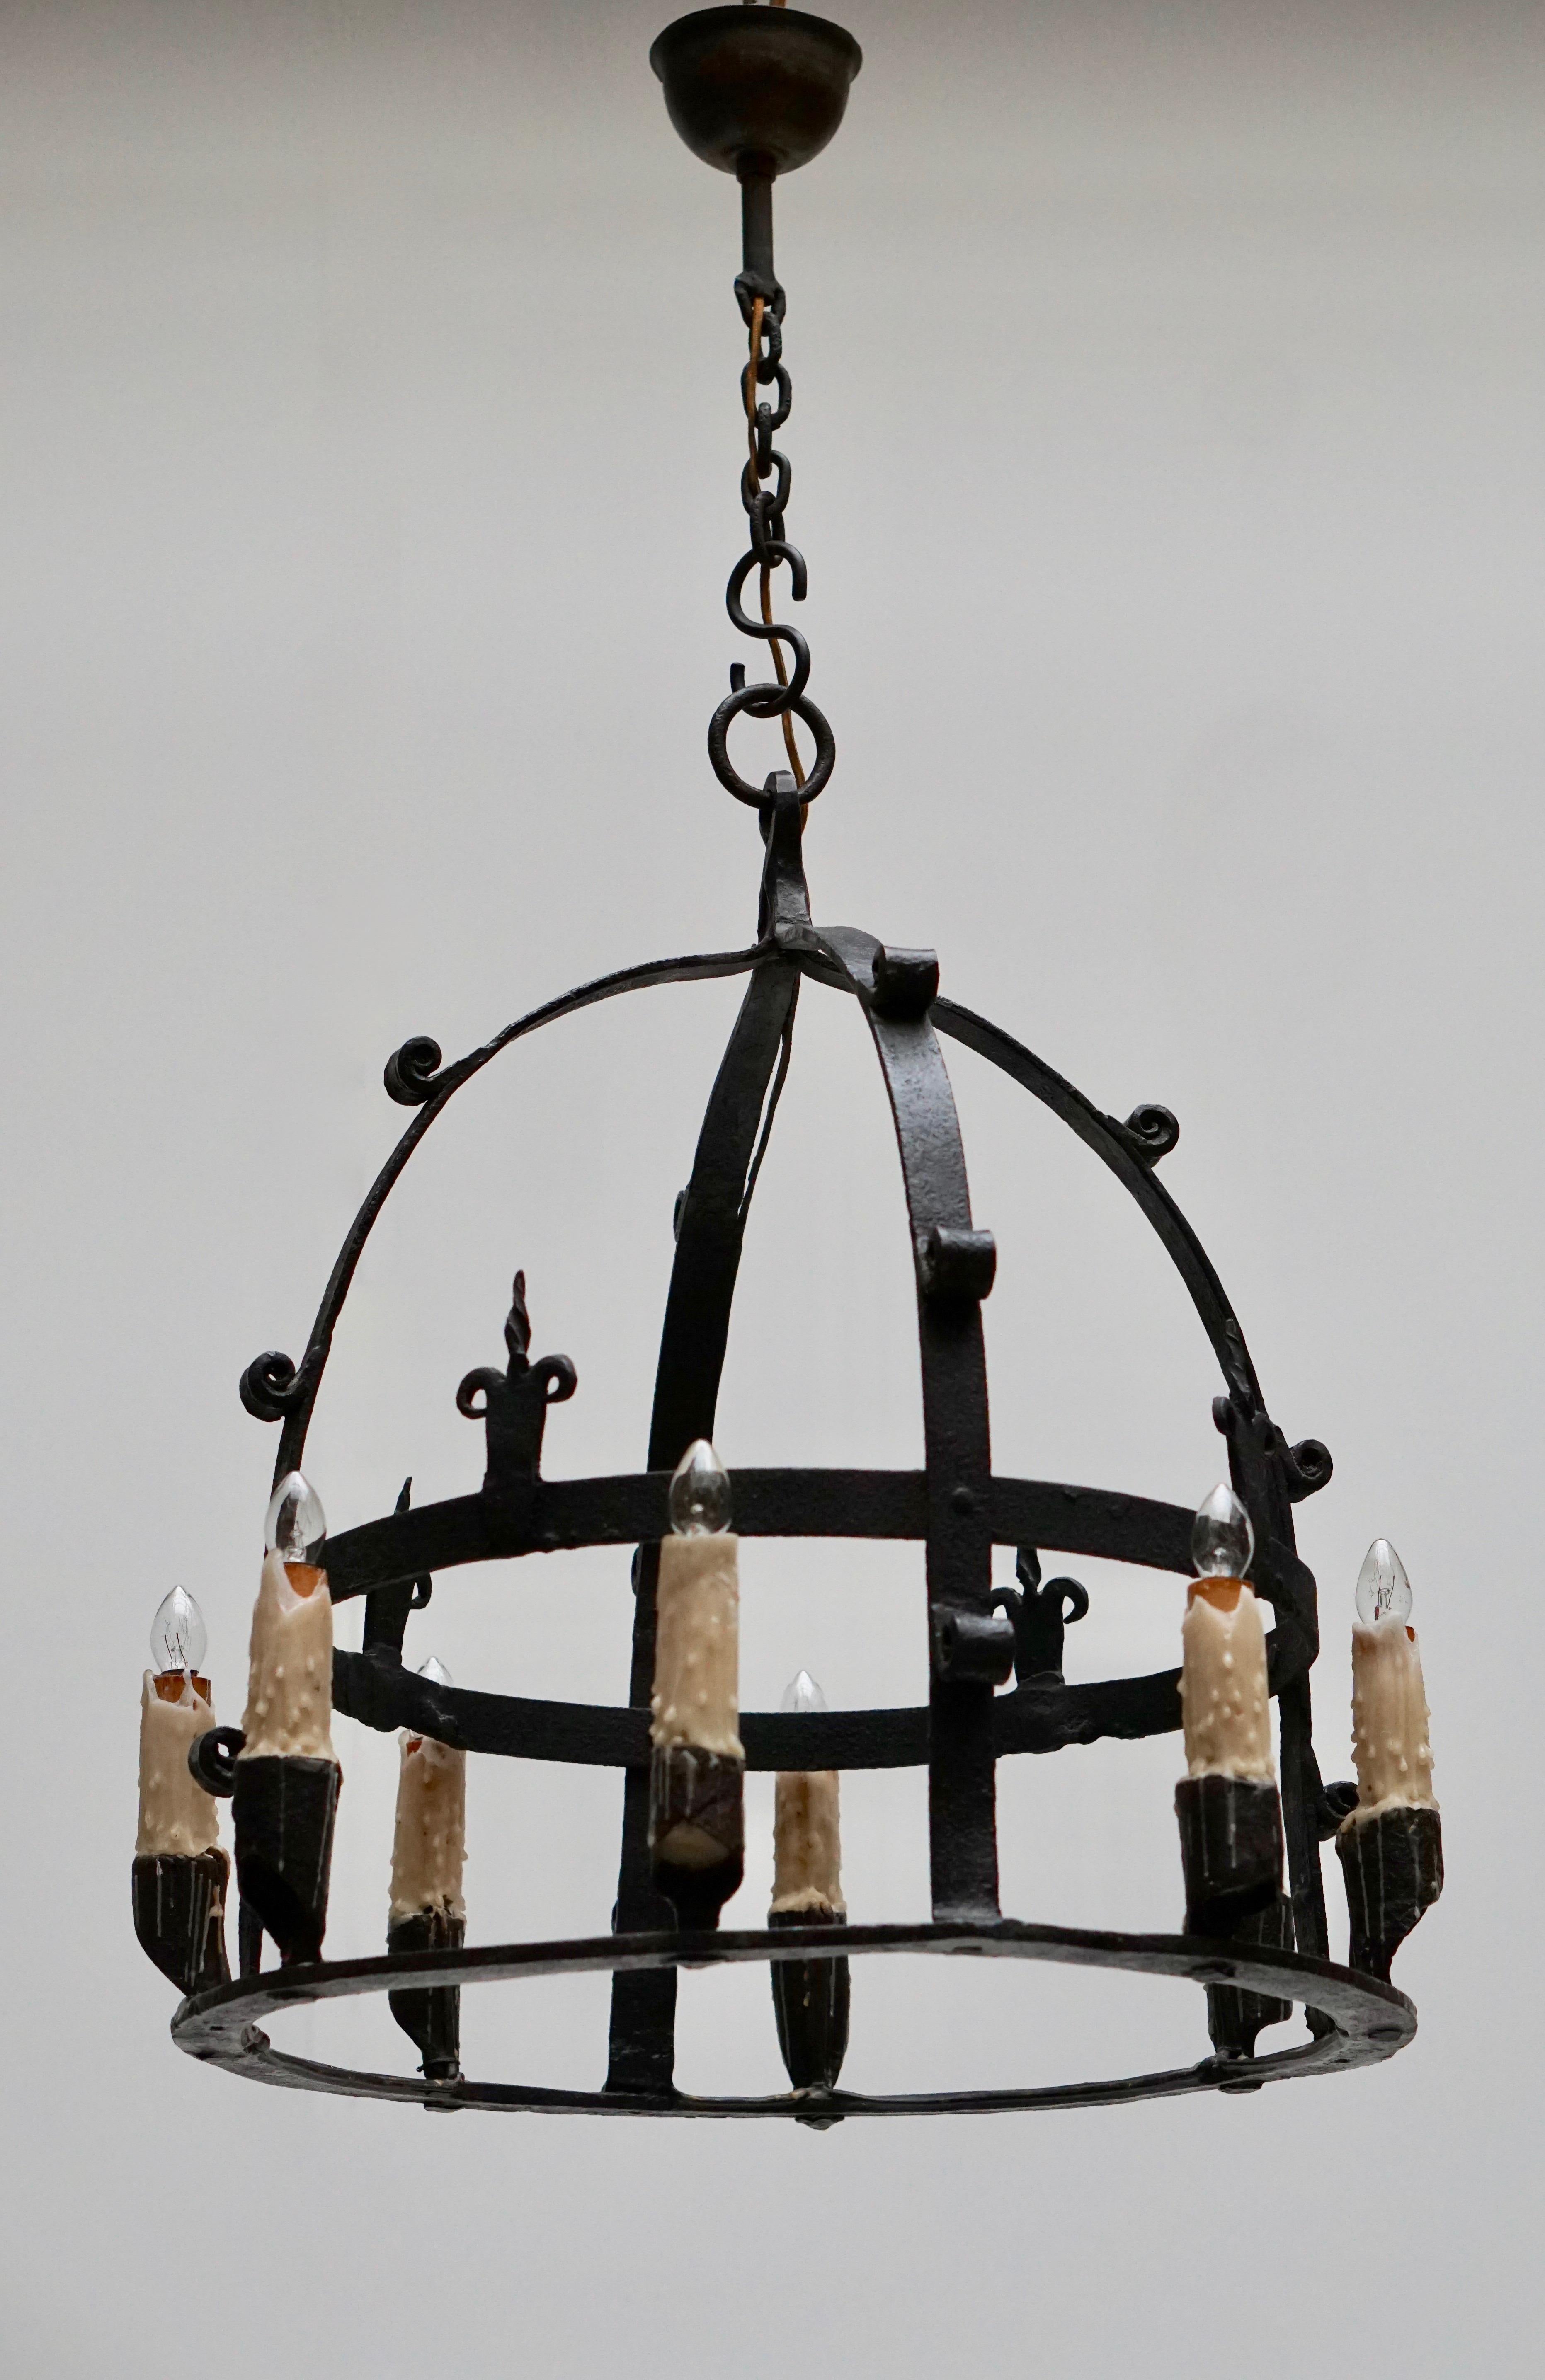 Wrought iron chandelier. Belgium.
Measure: Diameter 52 cm.
Height fixture 52 cm.
Total height including the chain 87 cm.